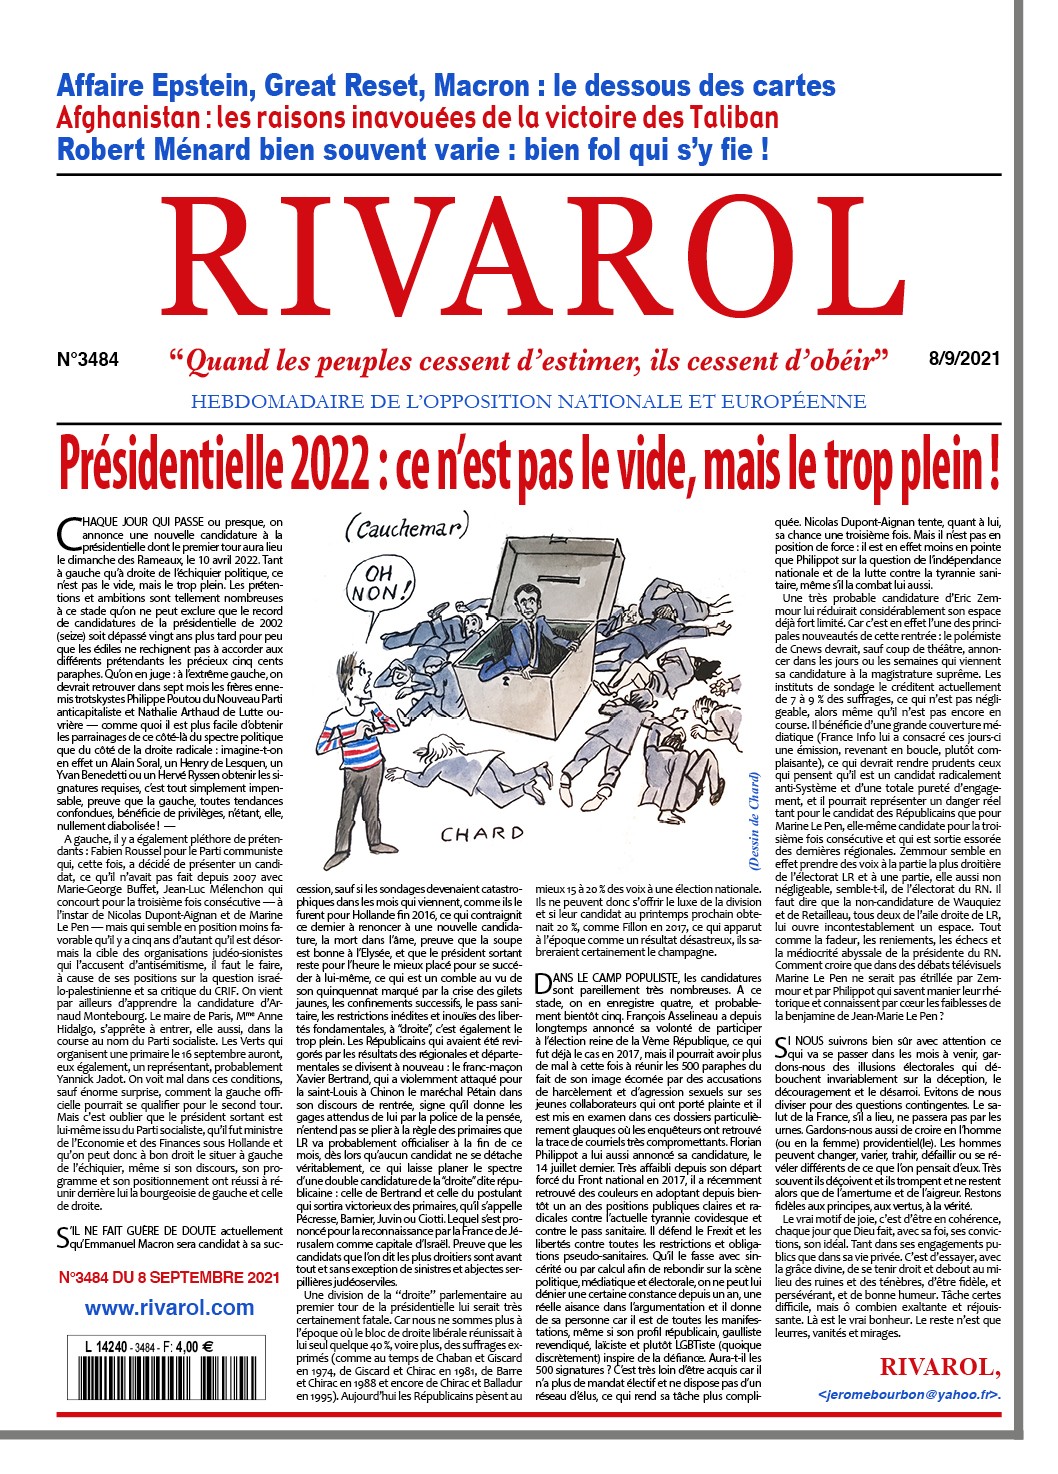 Rivarol n°3484 du 8/9/2021